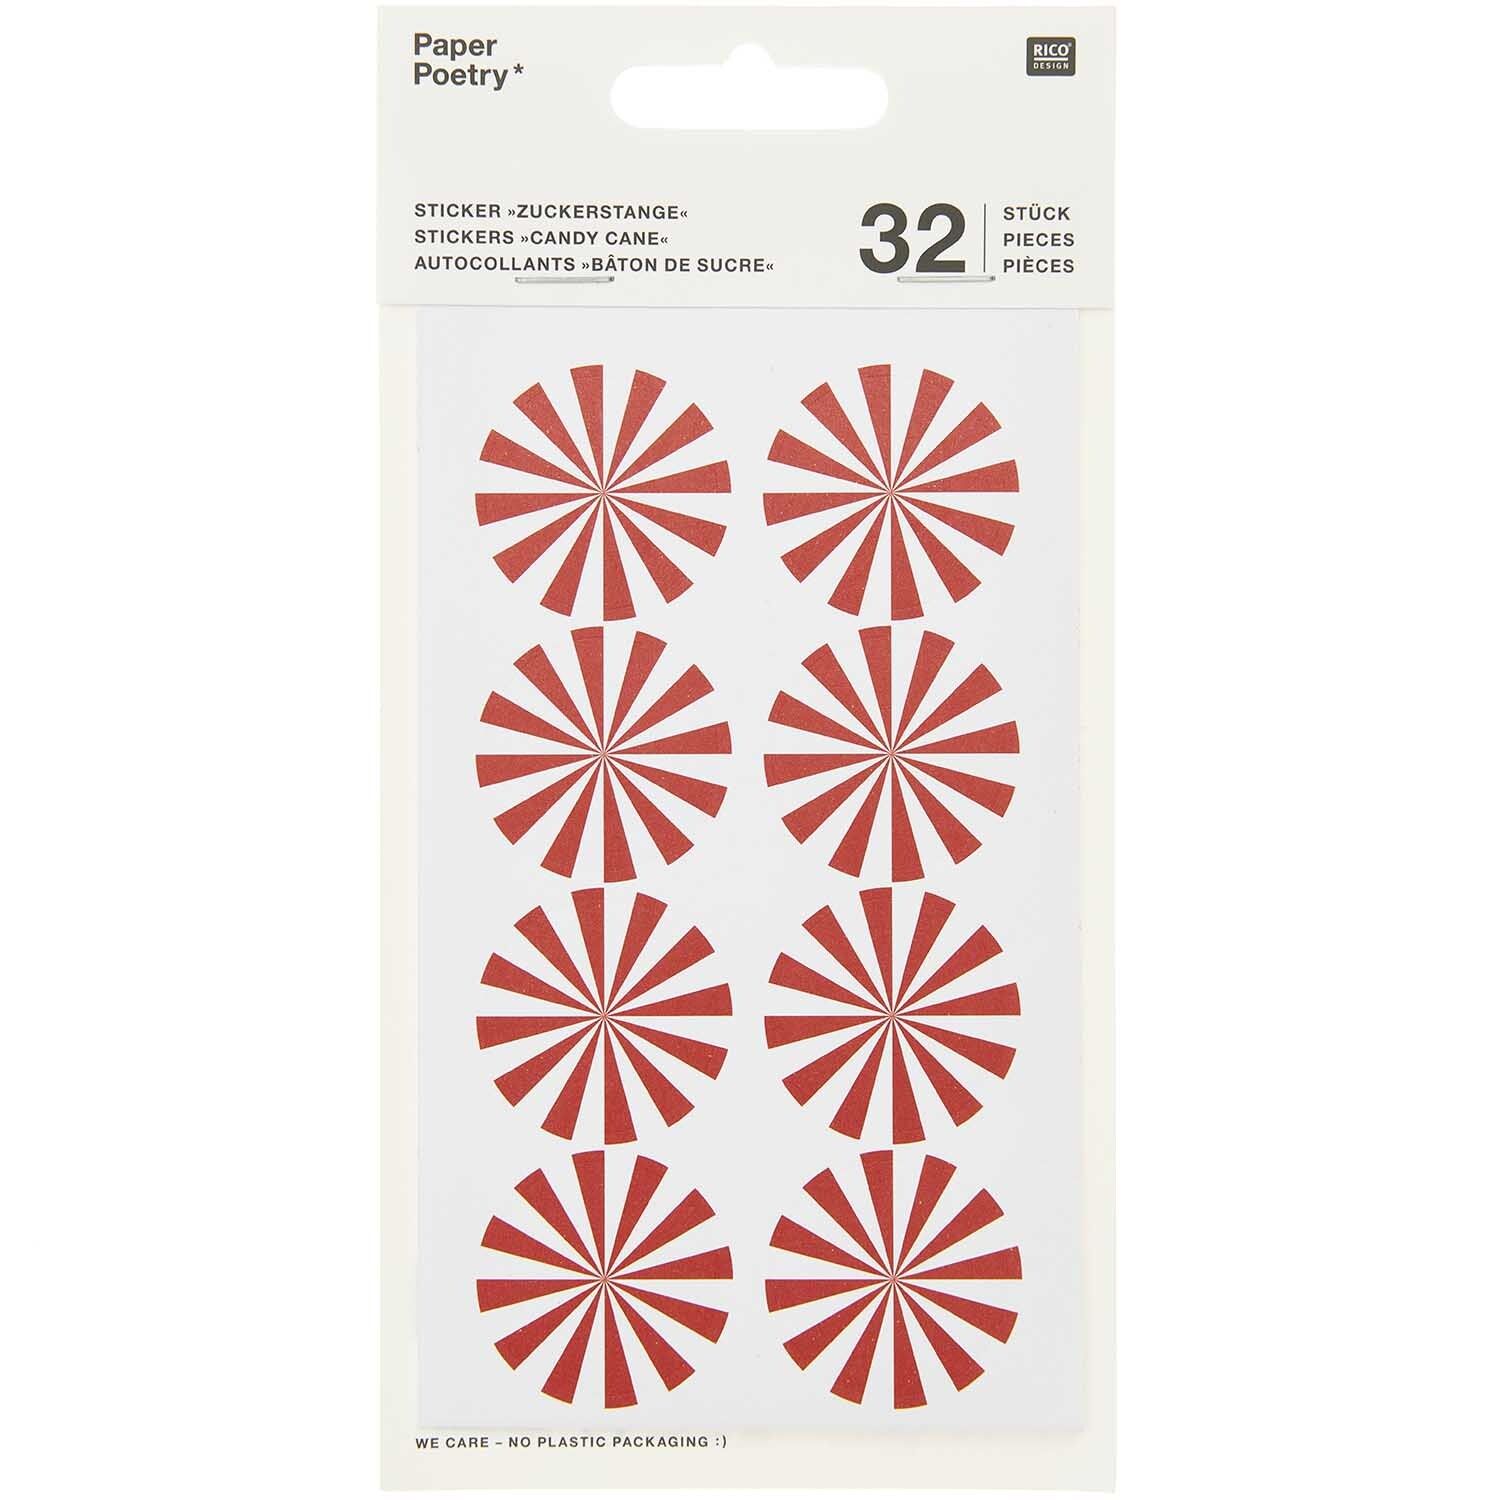 Paper Poetry Sticker Christmas rot-weiß 4 Blatt